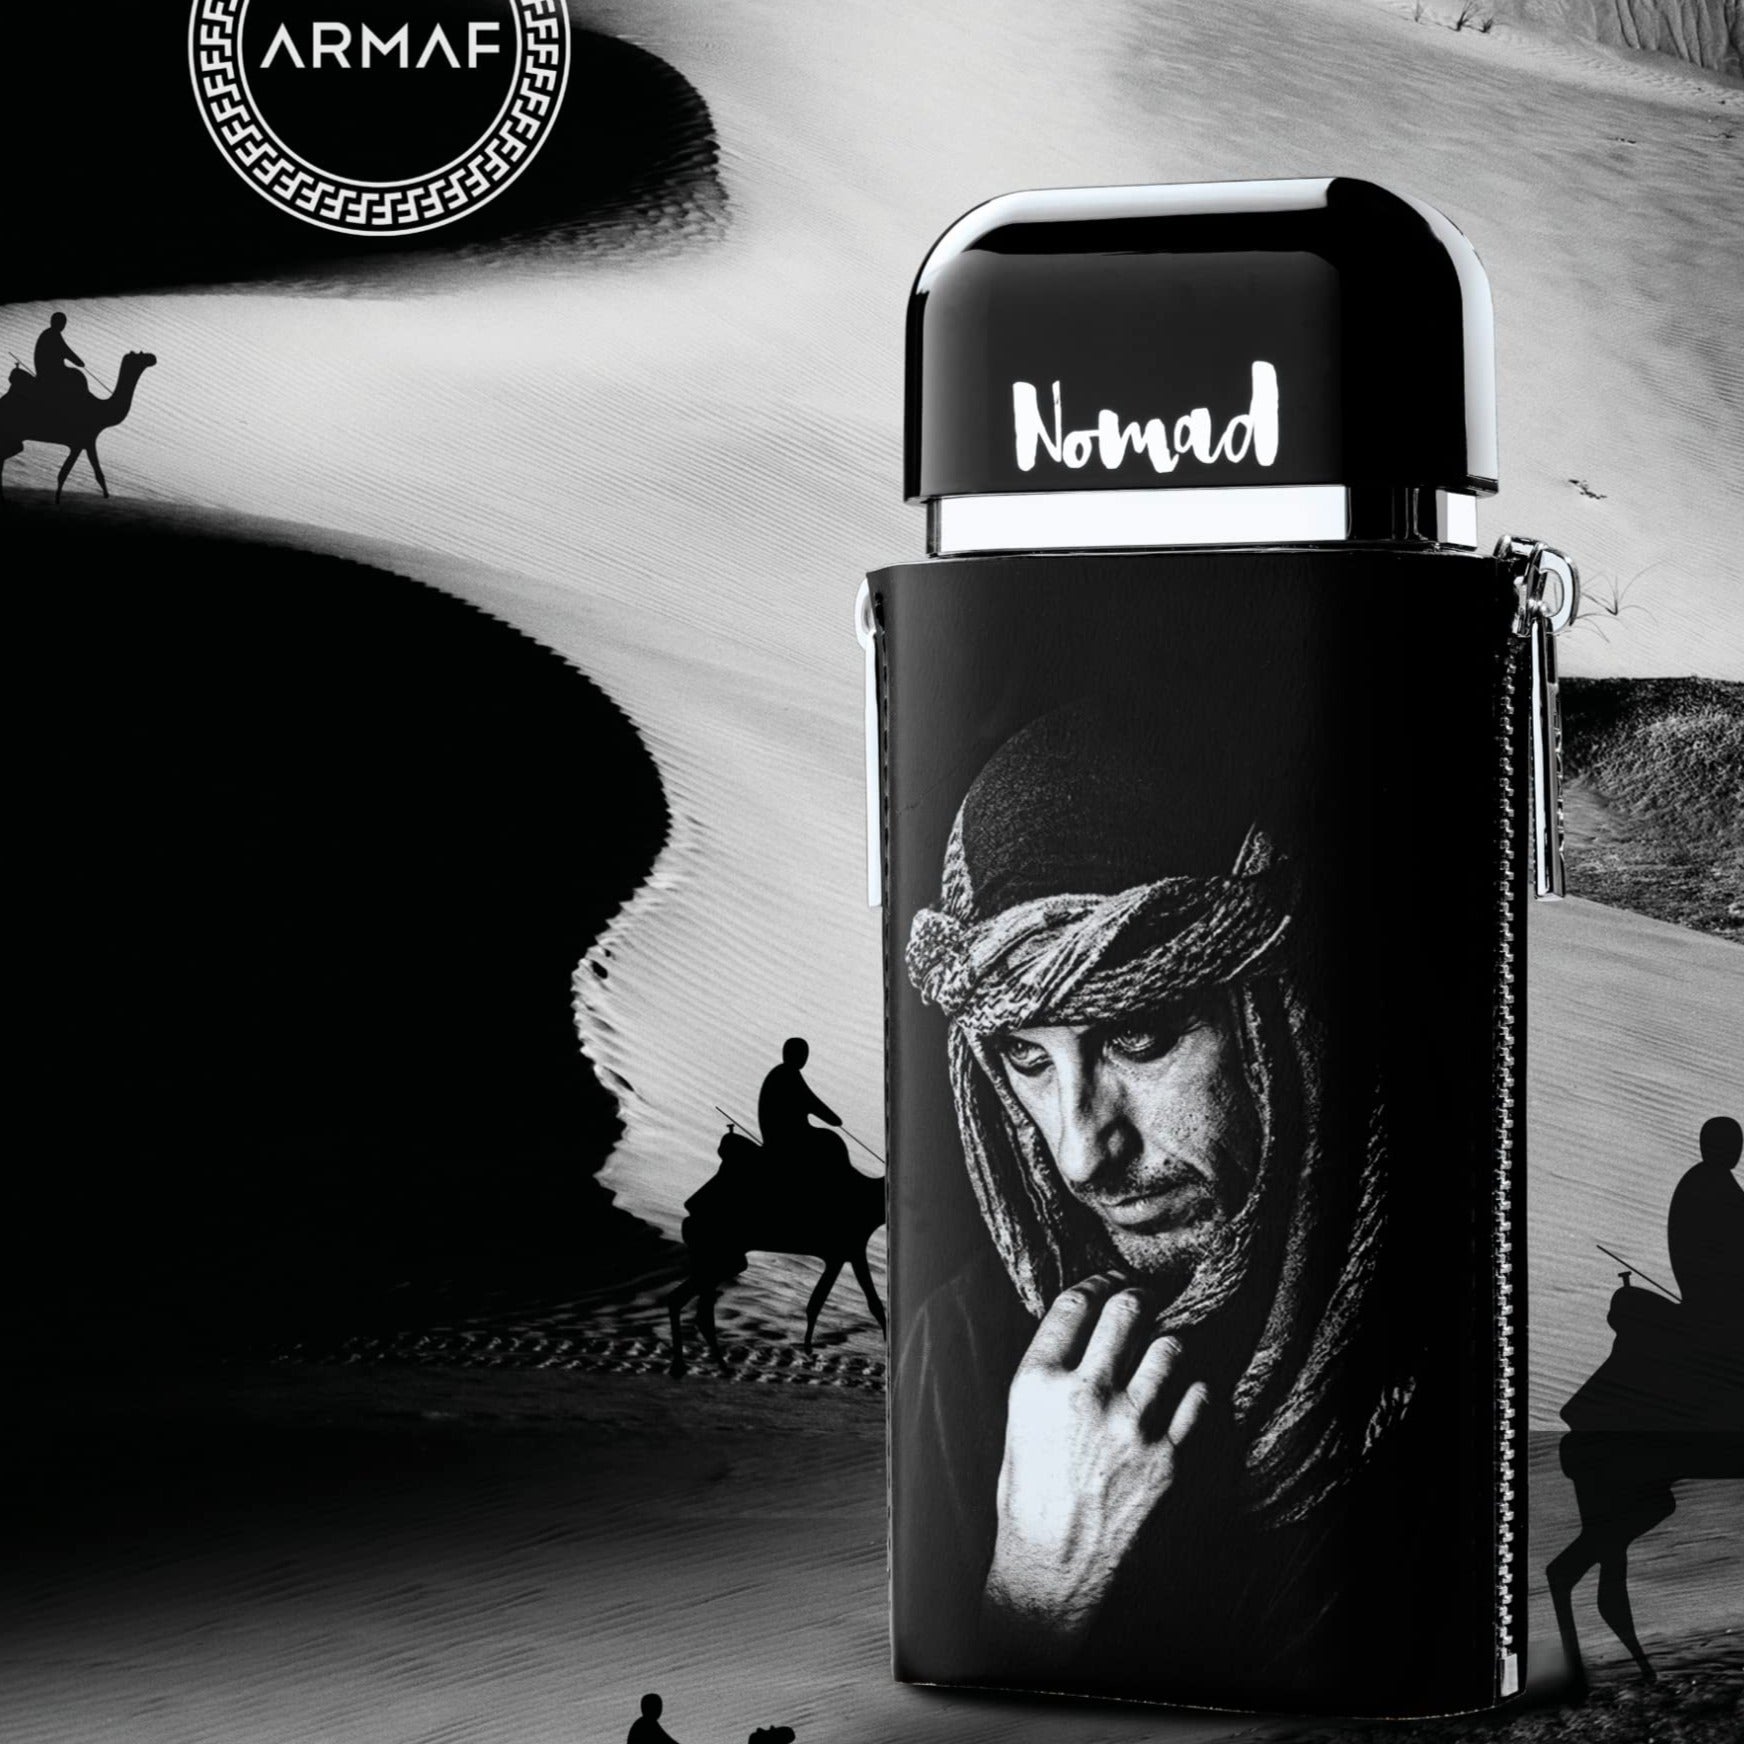 Armaf Nomad The Wanderer Pour Homme EDP | My Perfume Shop Australia